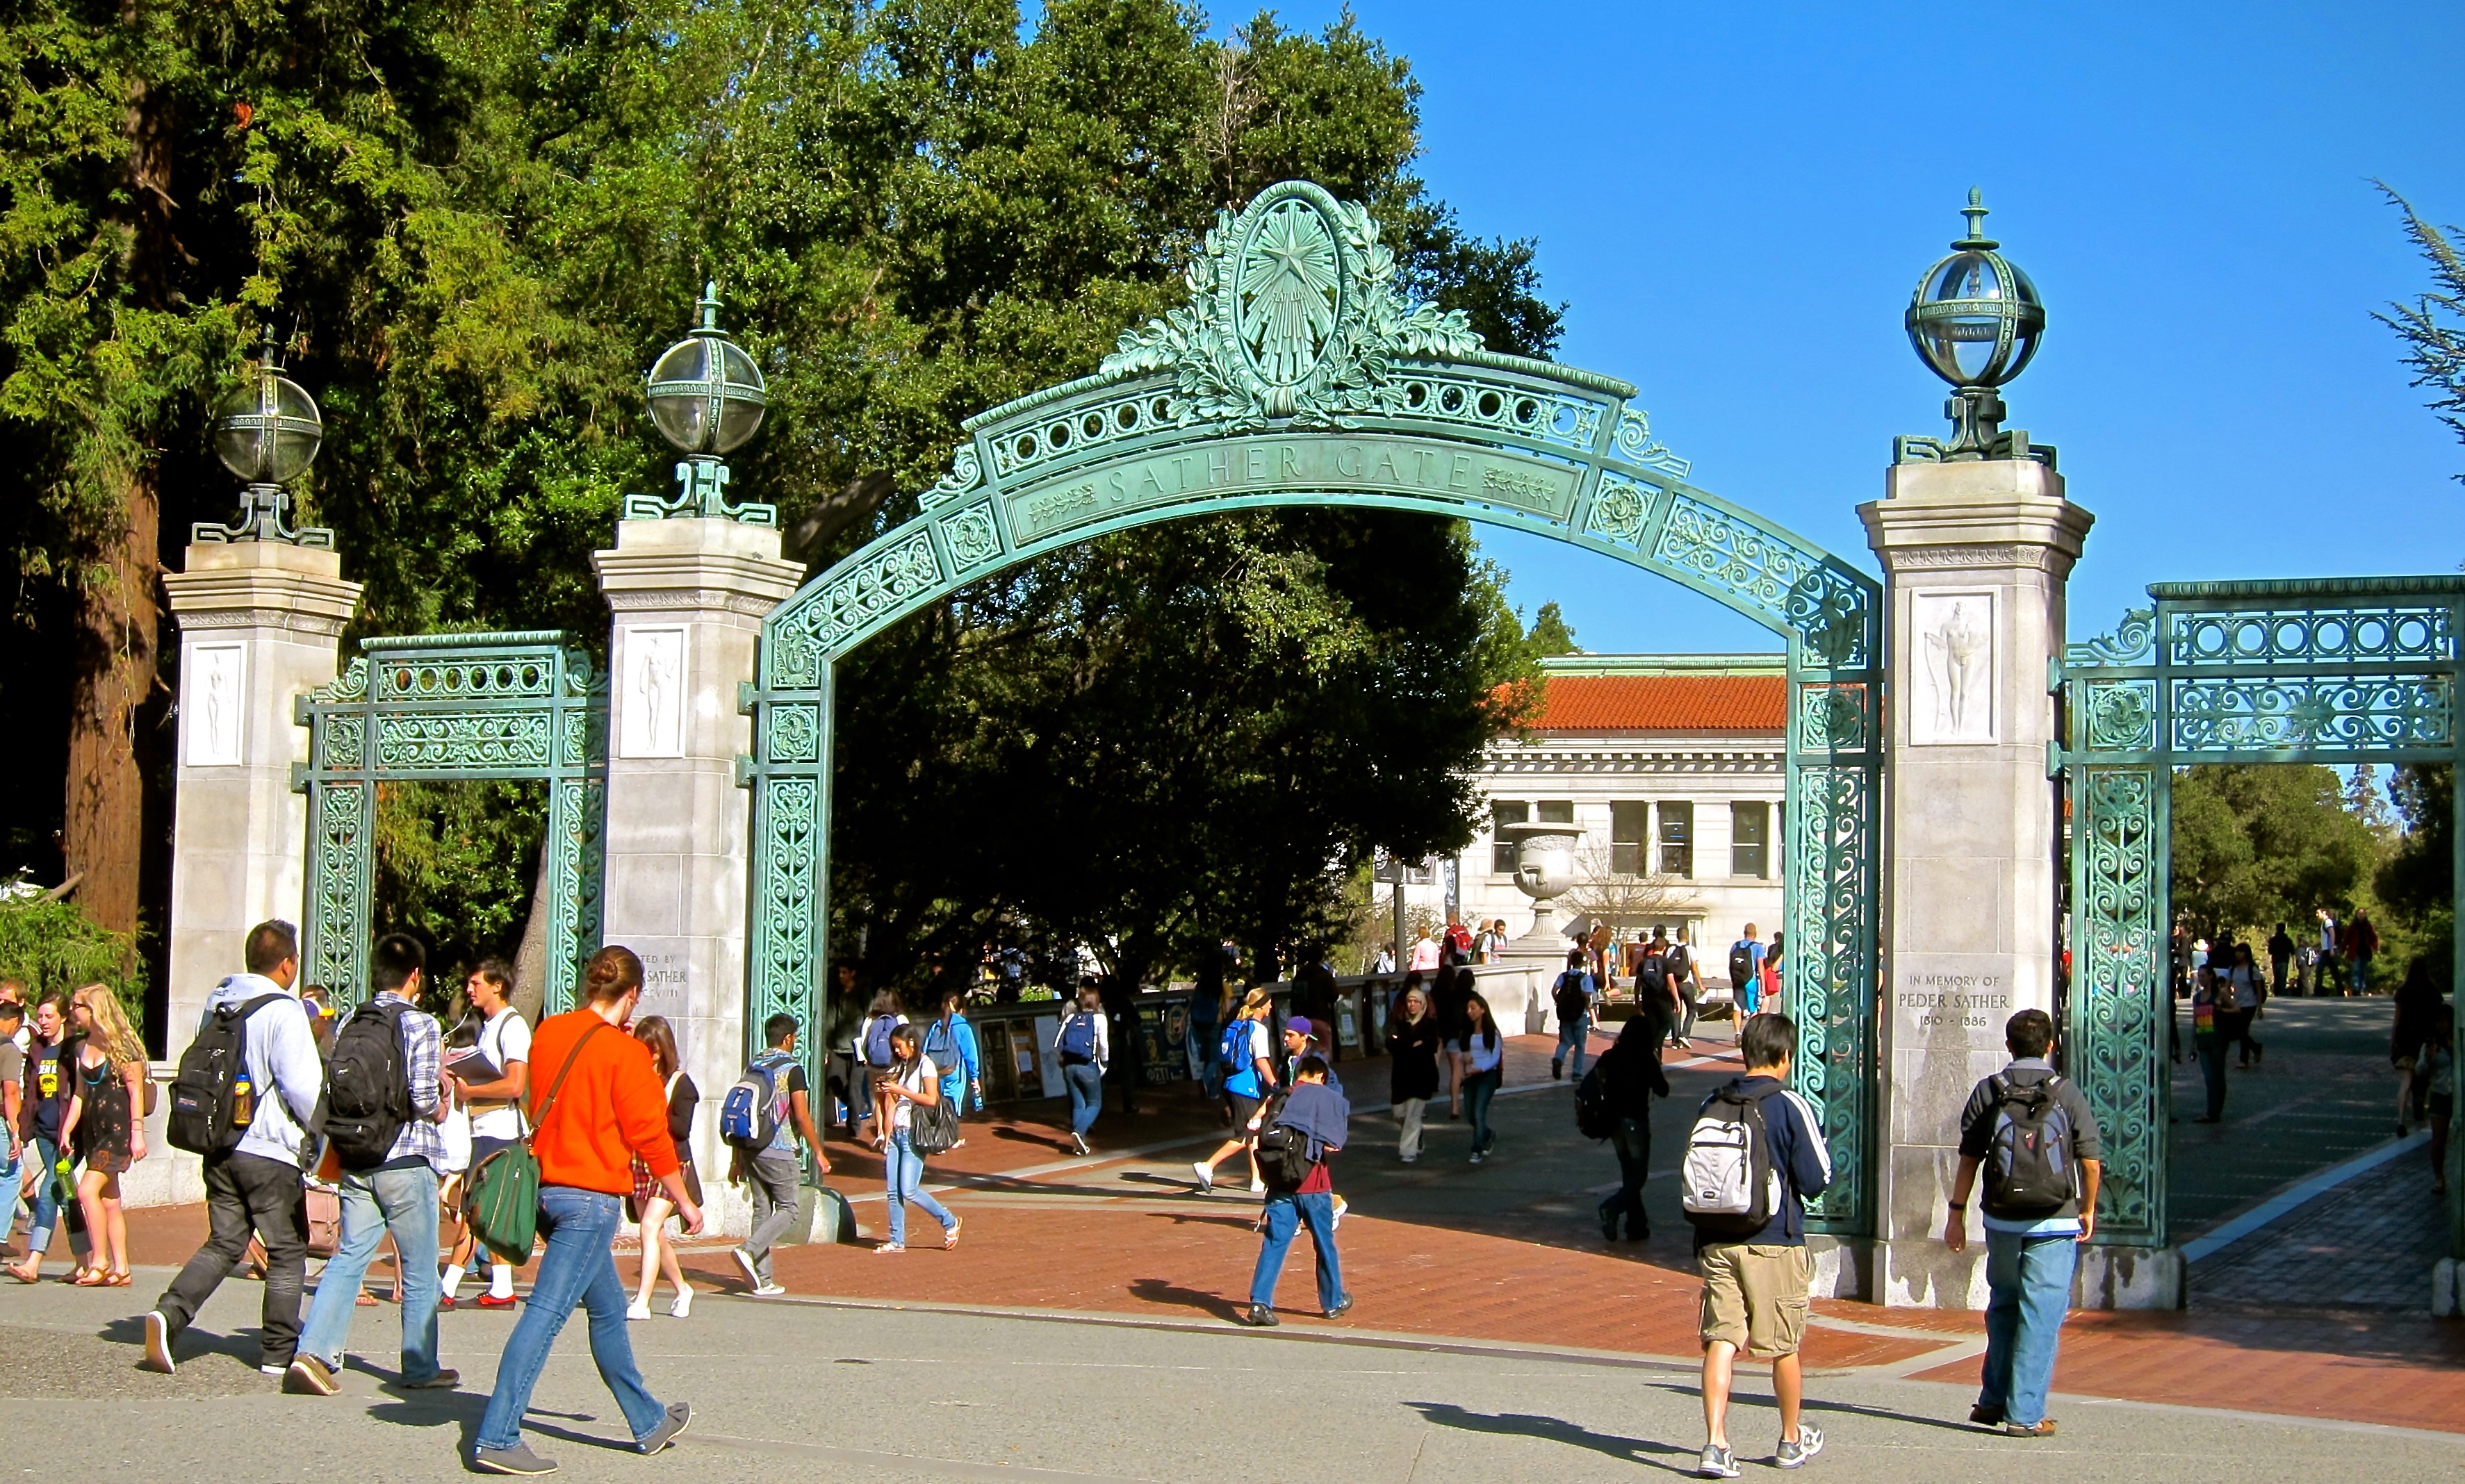 Sather Gate at Berkeley